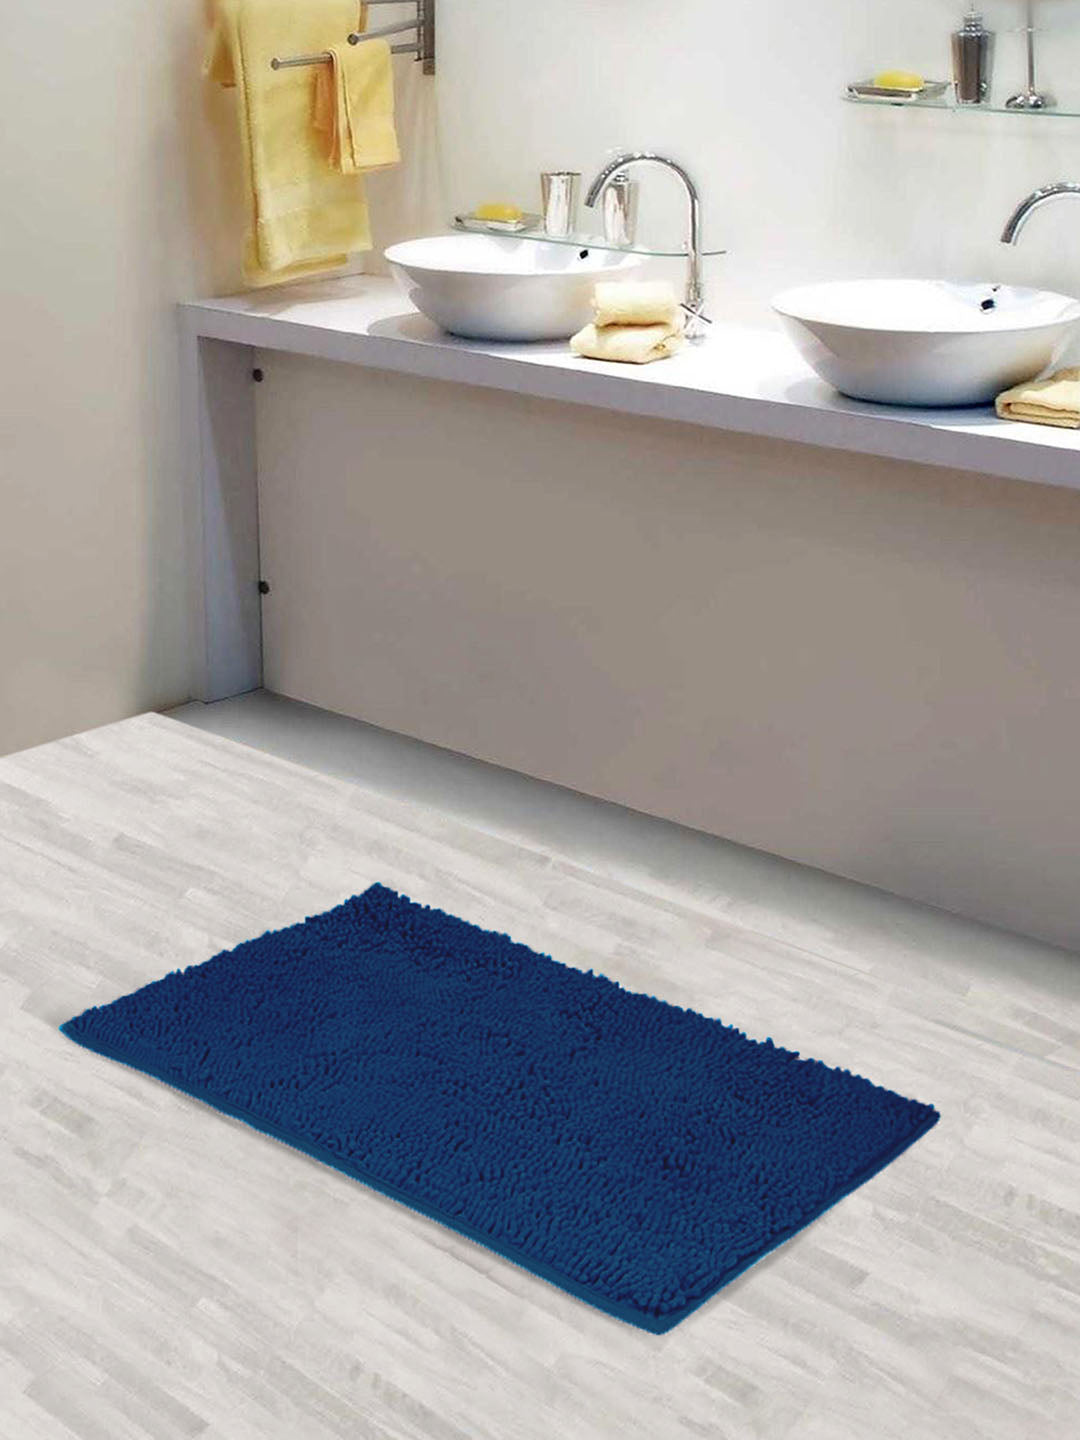 Lushomes Bathroom Mat, 1800 GSM Floor Mat with High Pile Microfiber, anti skid mat for bathroom floor, bath mat, door mats for bathroom (16 x 24 Inch, Single Pc, Blue)